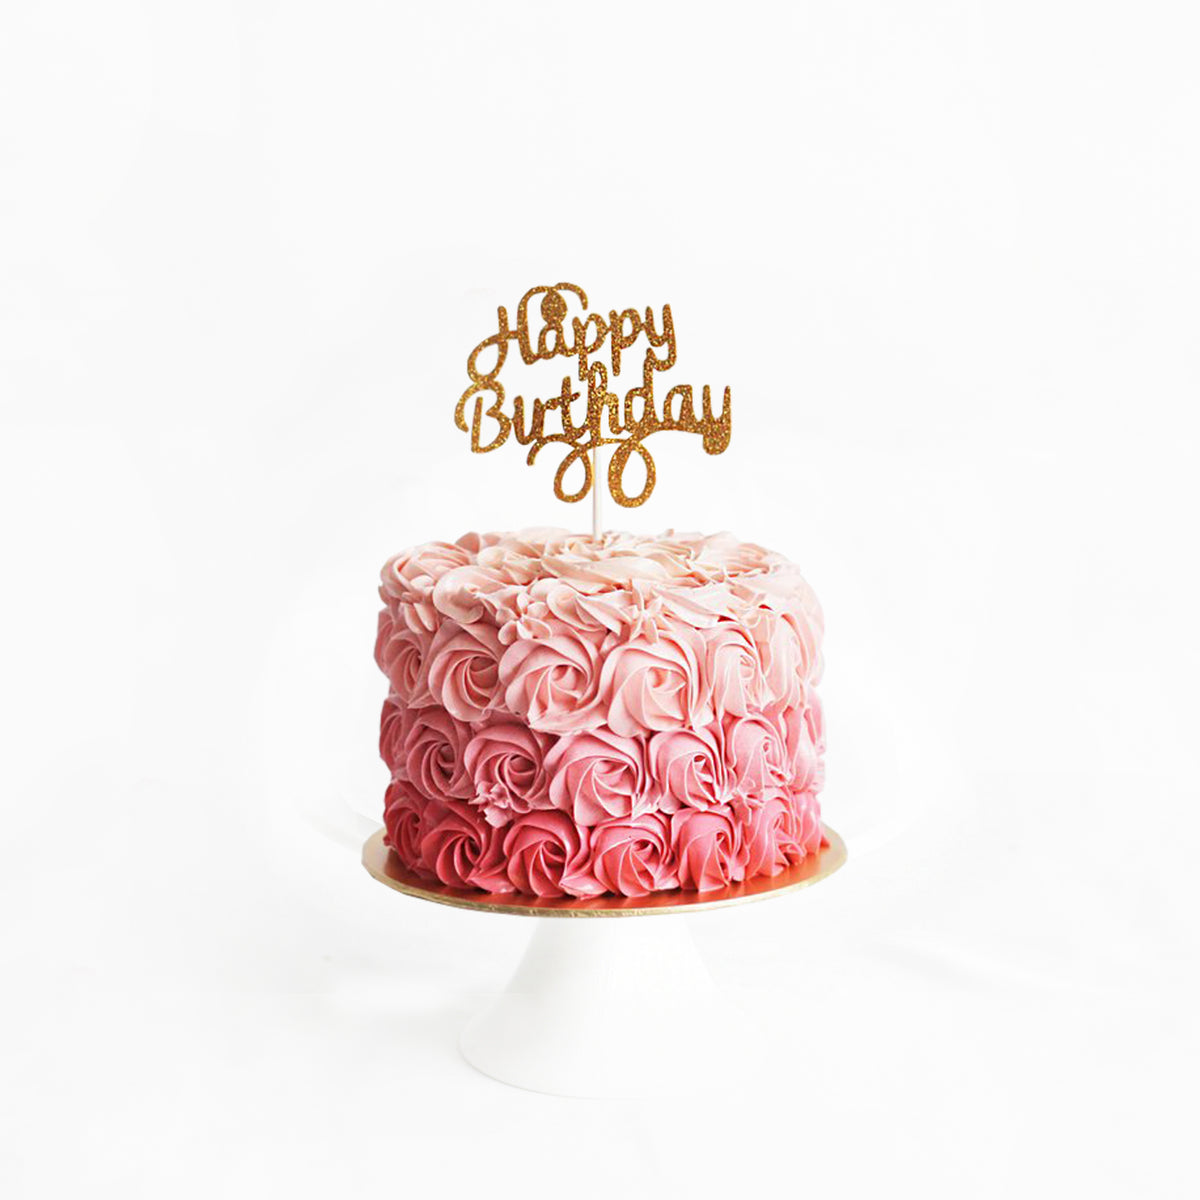 Best 49th Birthday Cake Gift Ideas | Zazzle